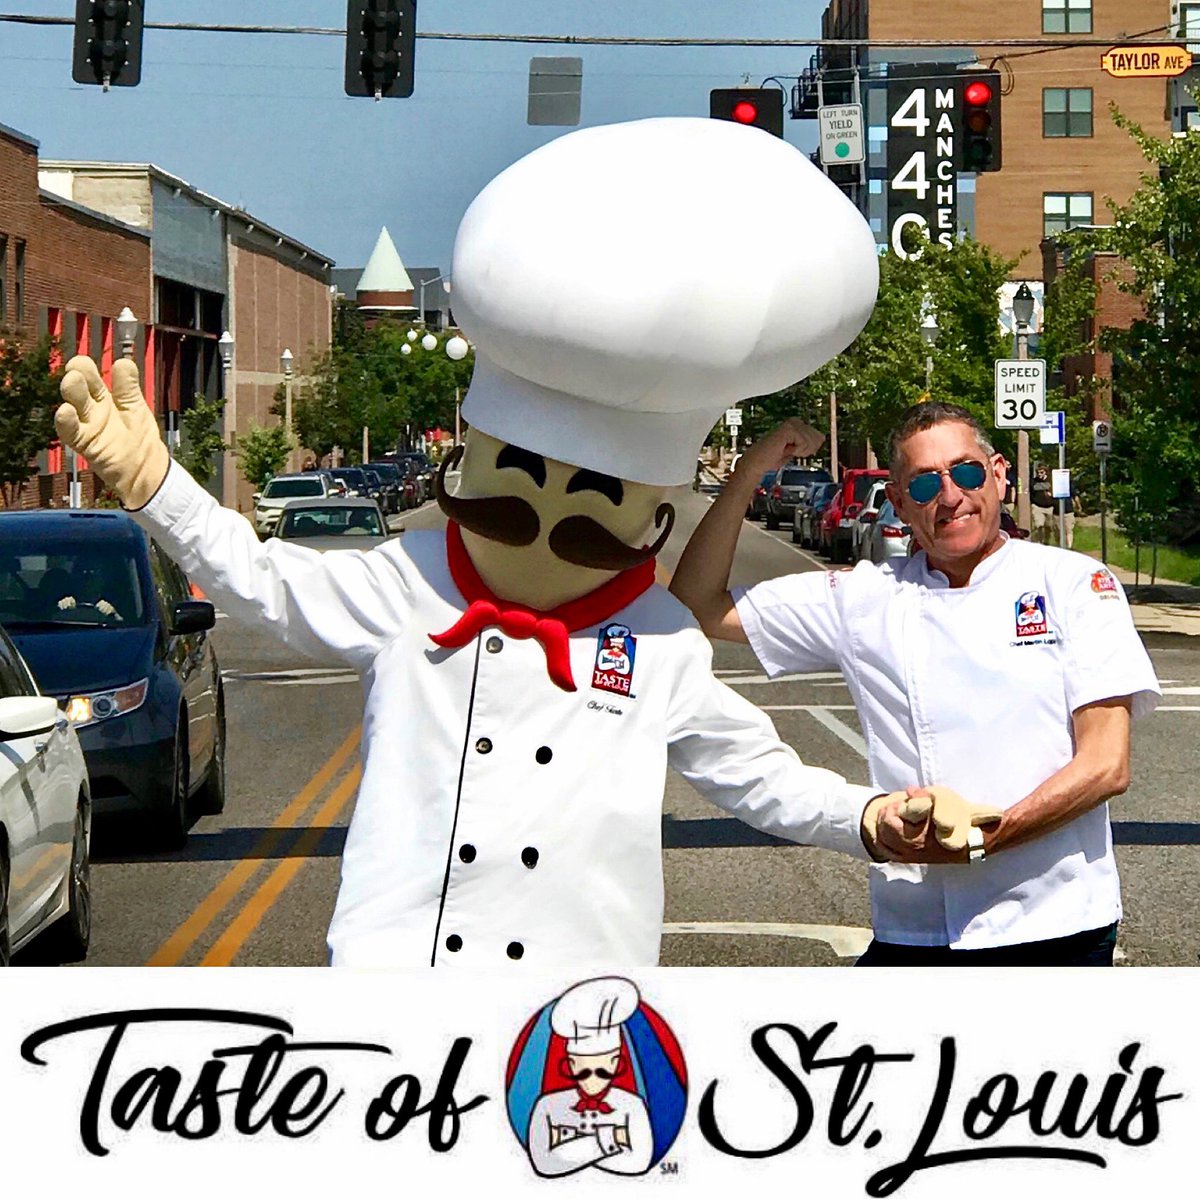 Yes, we are back downtown St. Louis!
Come join us September 13-15
@tasteofstlouis
TasteSTL.com
#ChefMartin #TasteSTL #Stl #stlouisfoodie #stlouis